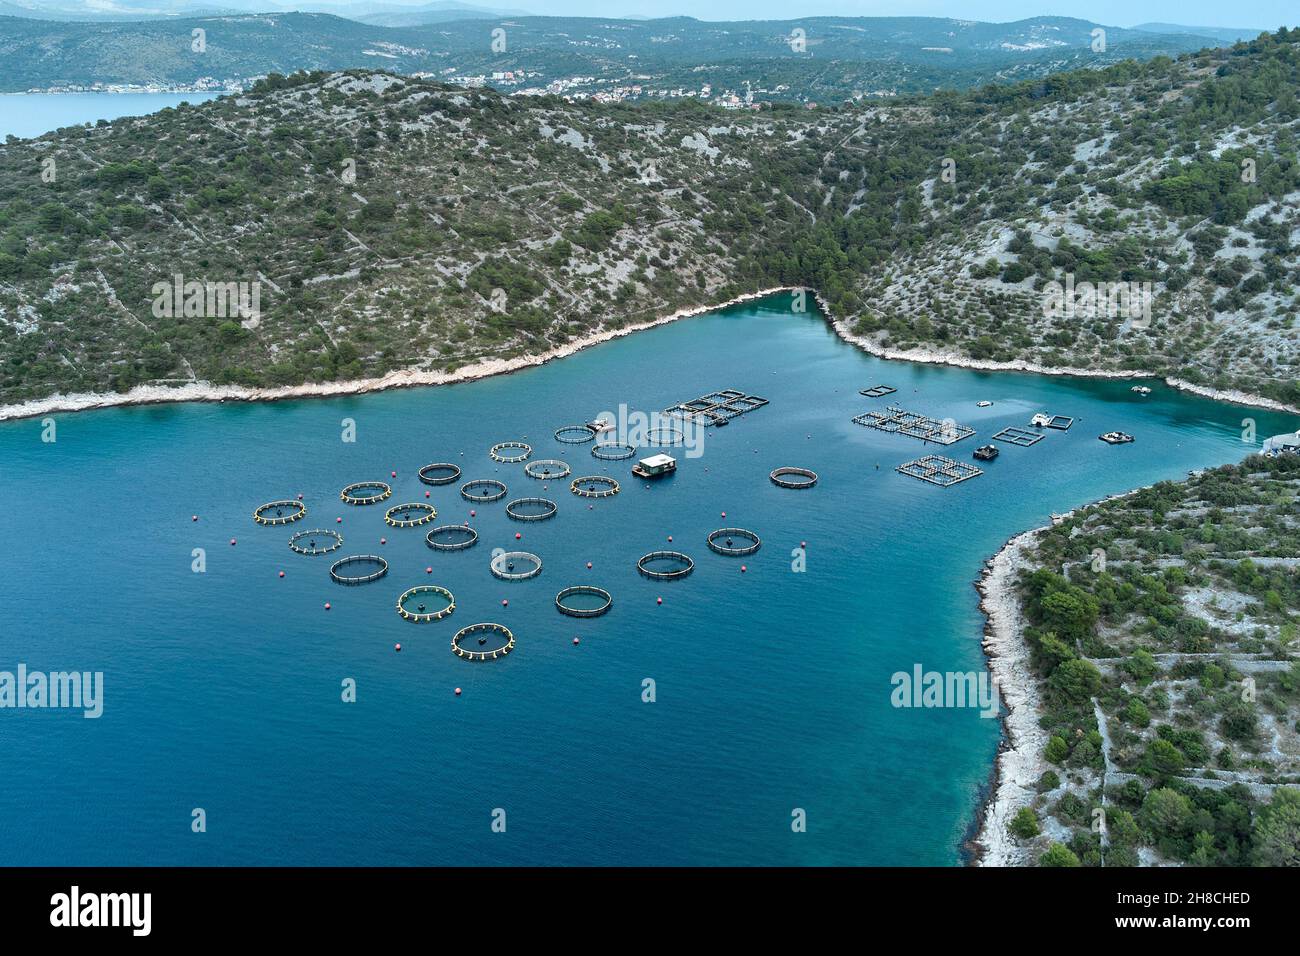 Aerial view of many circular fish farm pools in the beautiful Mediterranean  sea, Greece stock photo